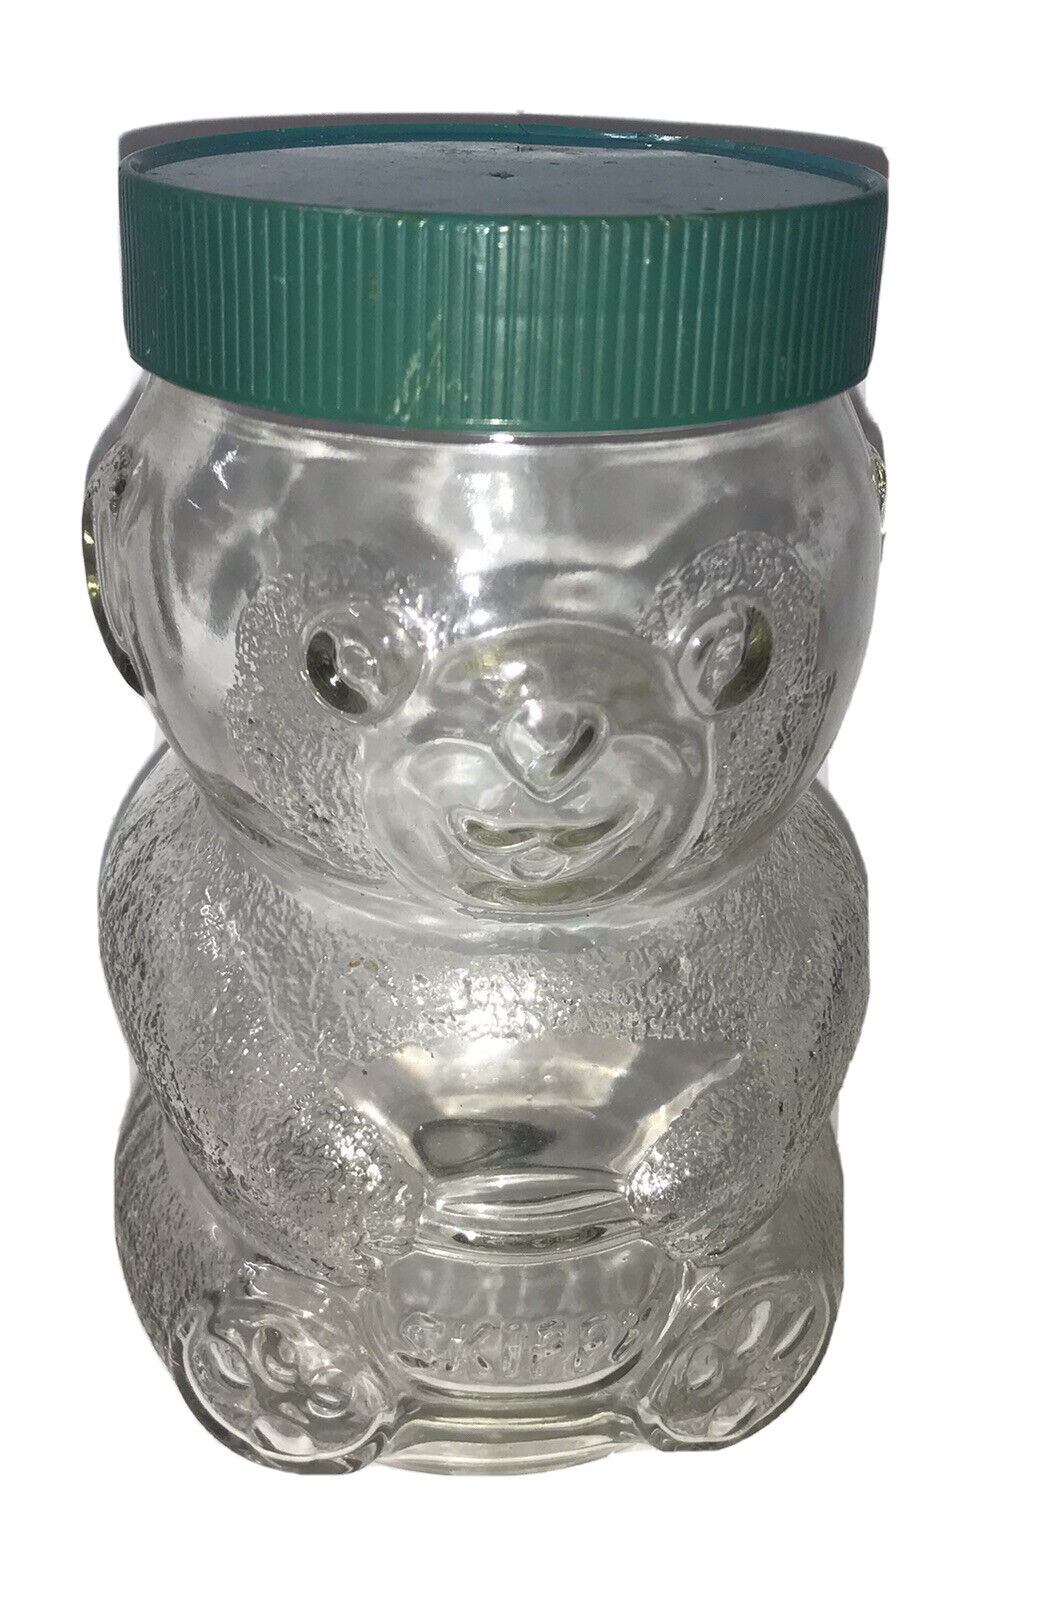 Vintage Glass Skippy Peanut Butter Squirrel ? Jar - 48 Ounce 7” Tall